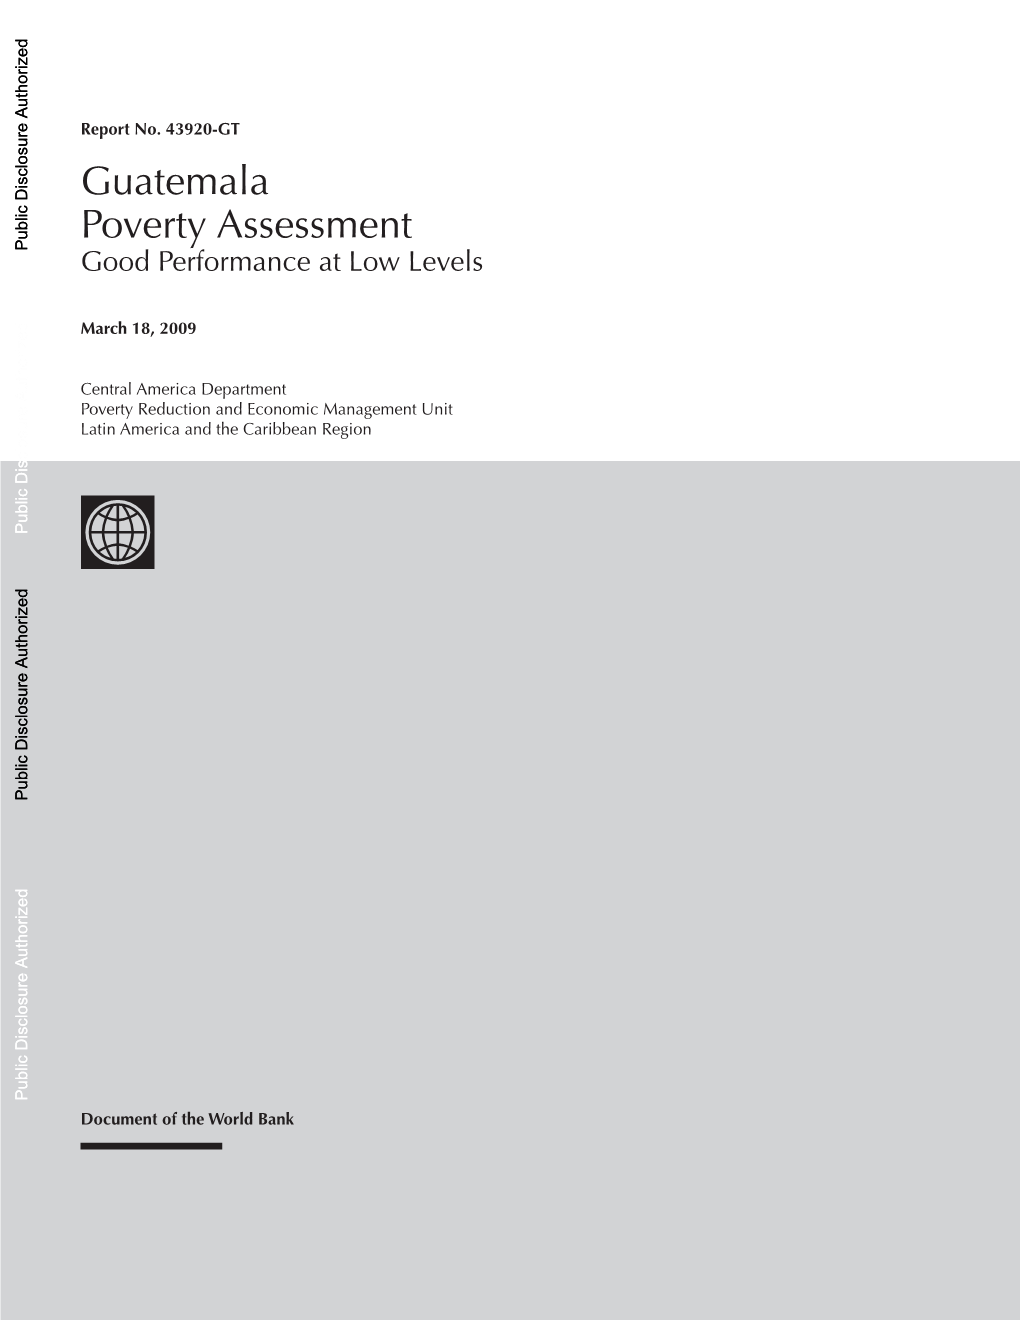 Guatemala Poverty Assessment Public Disclosure Authorized Authorized Disclosure Disclosure Public Public Good Performance at Low Levels